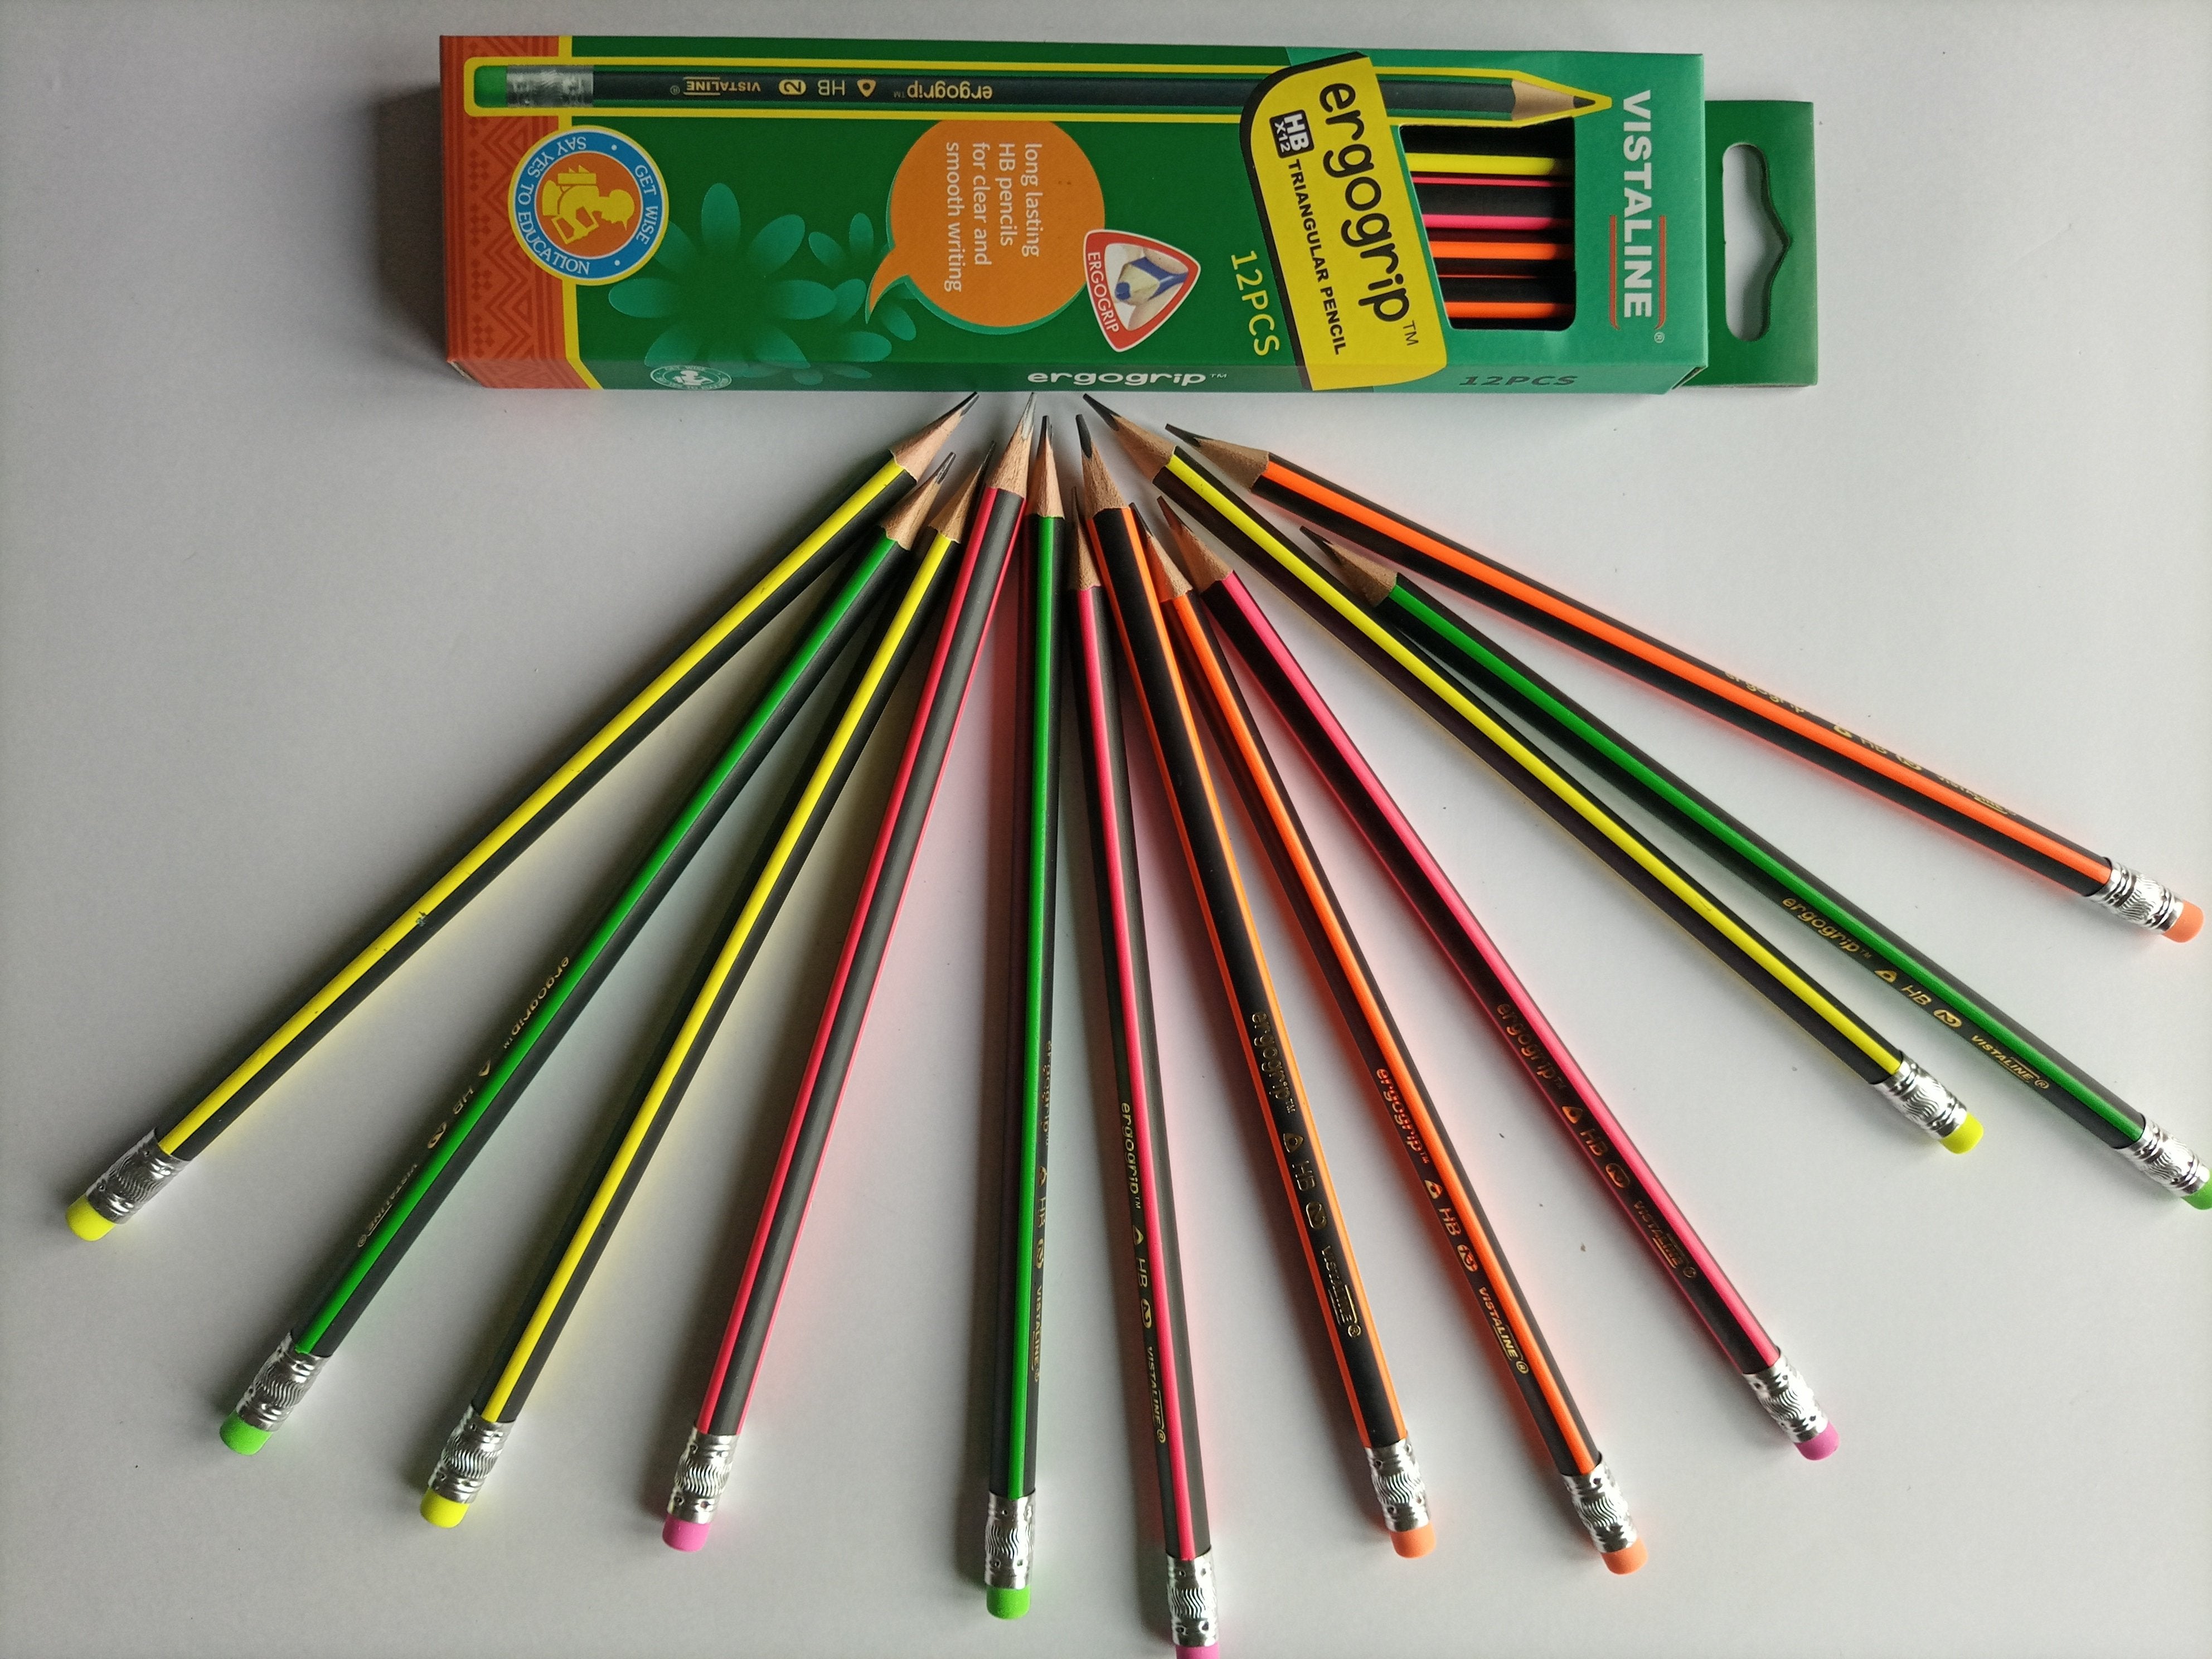 12 Pieces Ergogrip HB Pencil